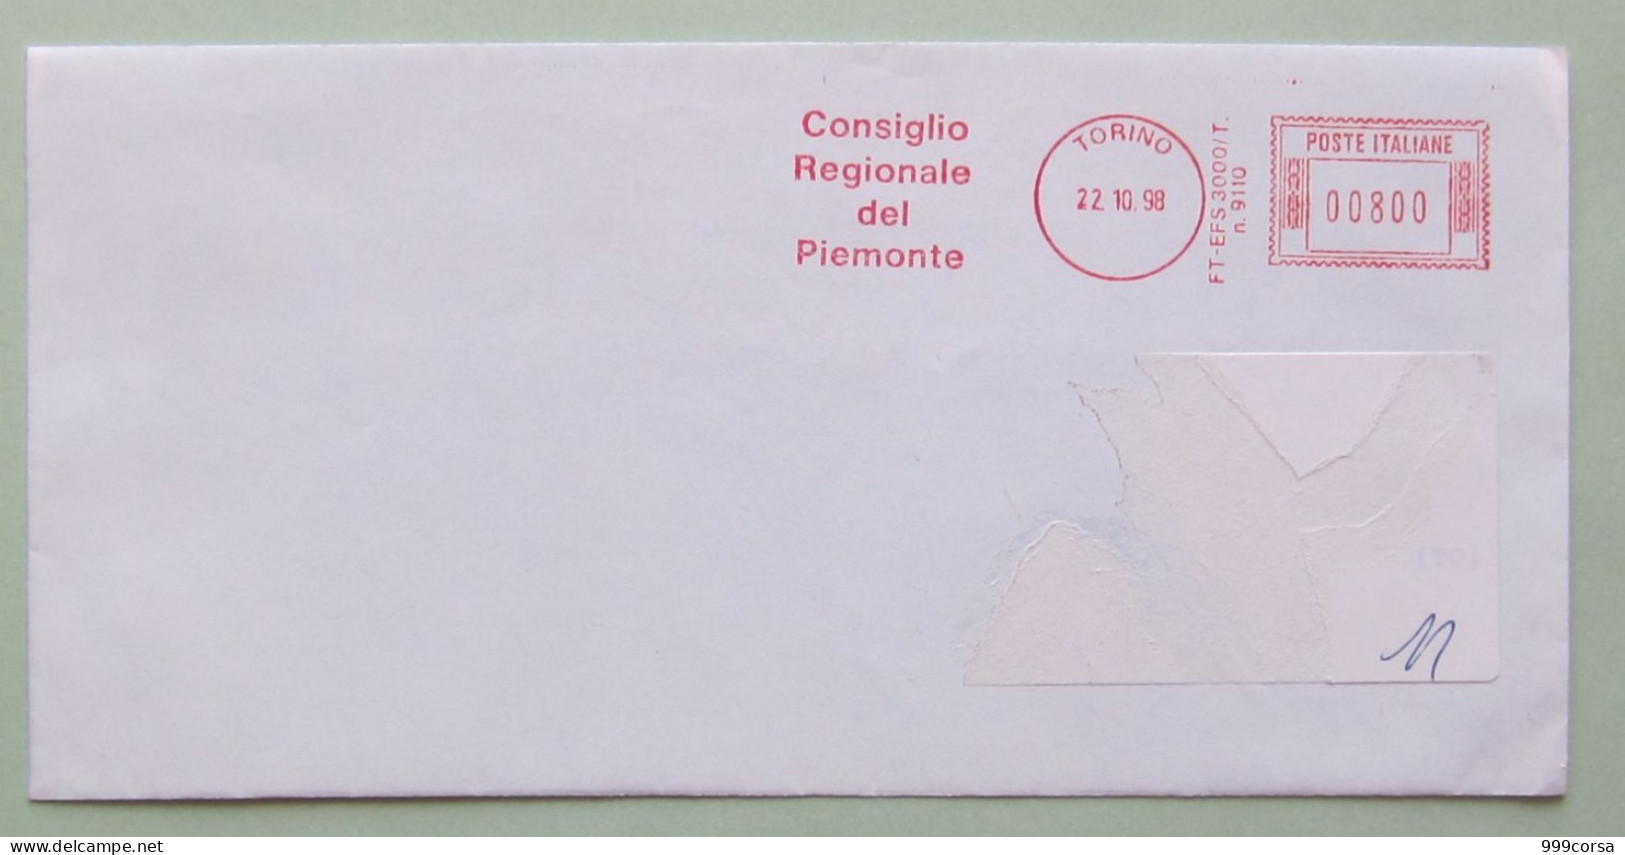 Consiglio Regionale Piemonte, 22-10-98, 800 Lire, Politica, Amministrazione, Partiti, Ema, Meter, Freistempel - Maschinenstempel (EMA)